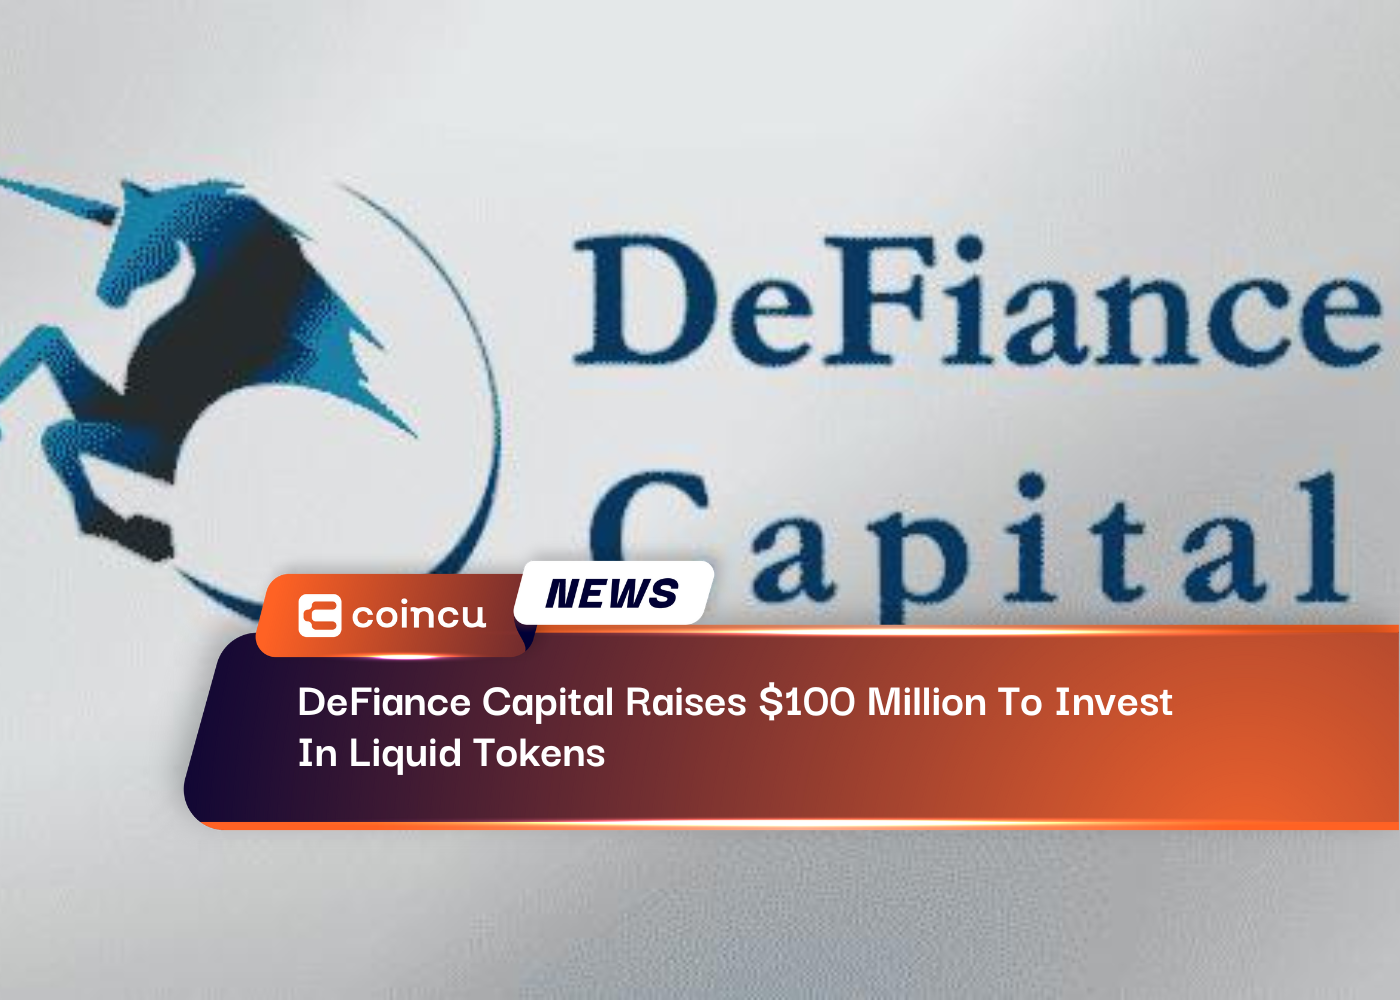 DeFiance Capital Raises 100 Million To Invest